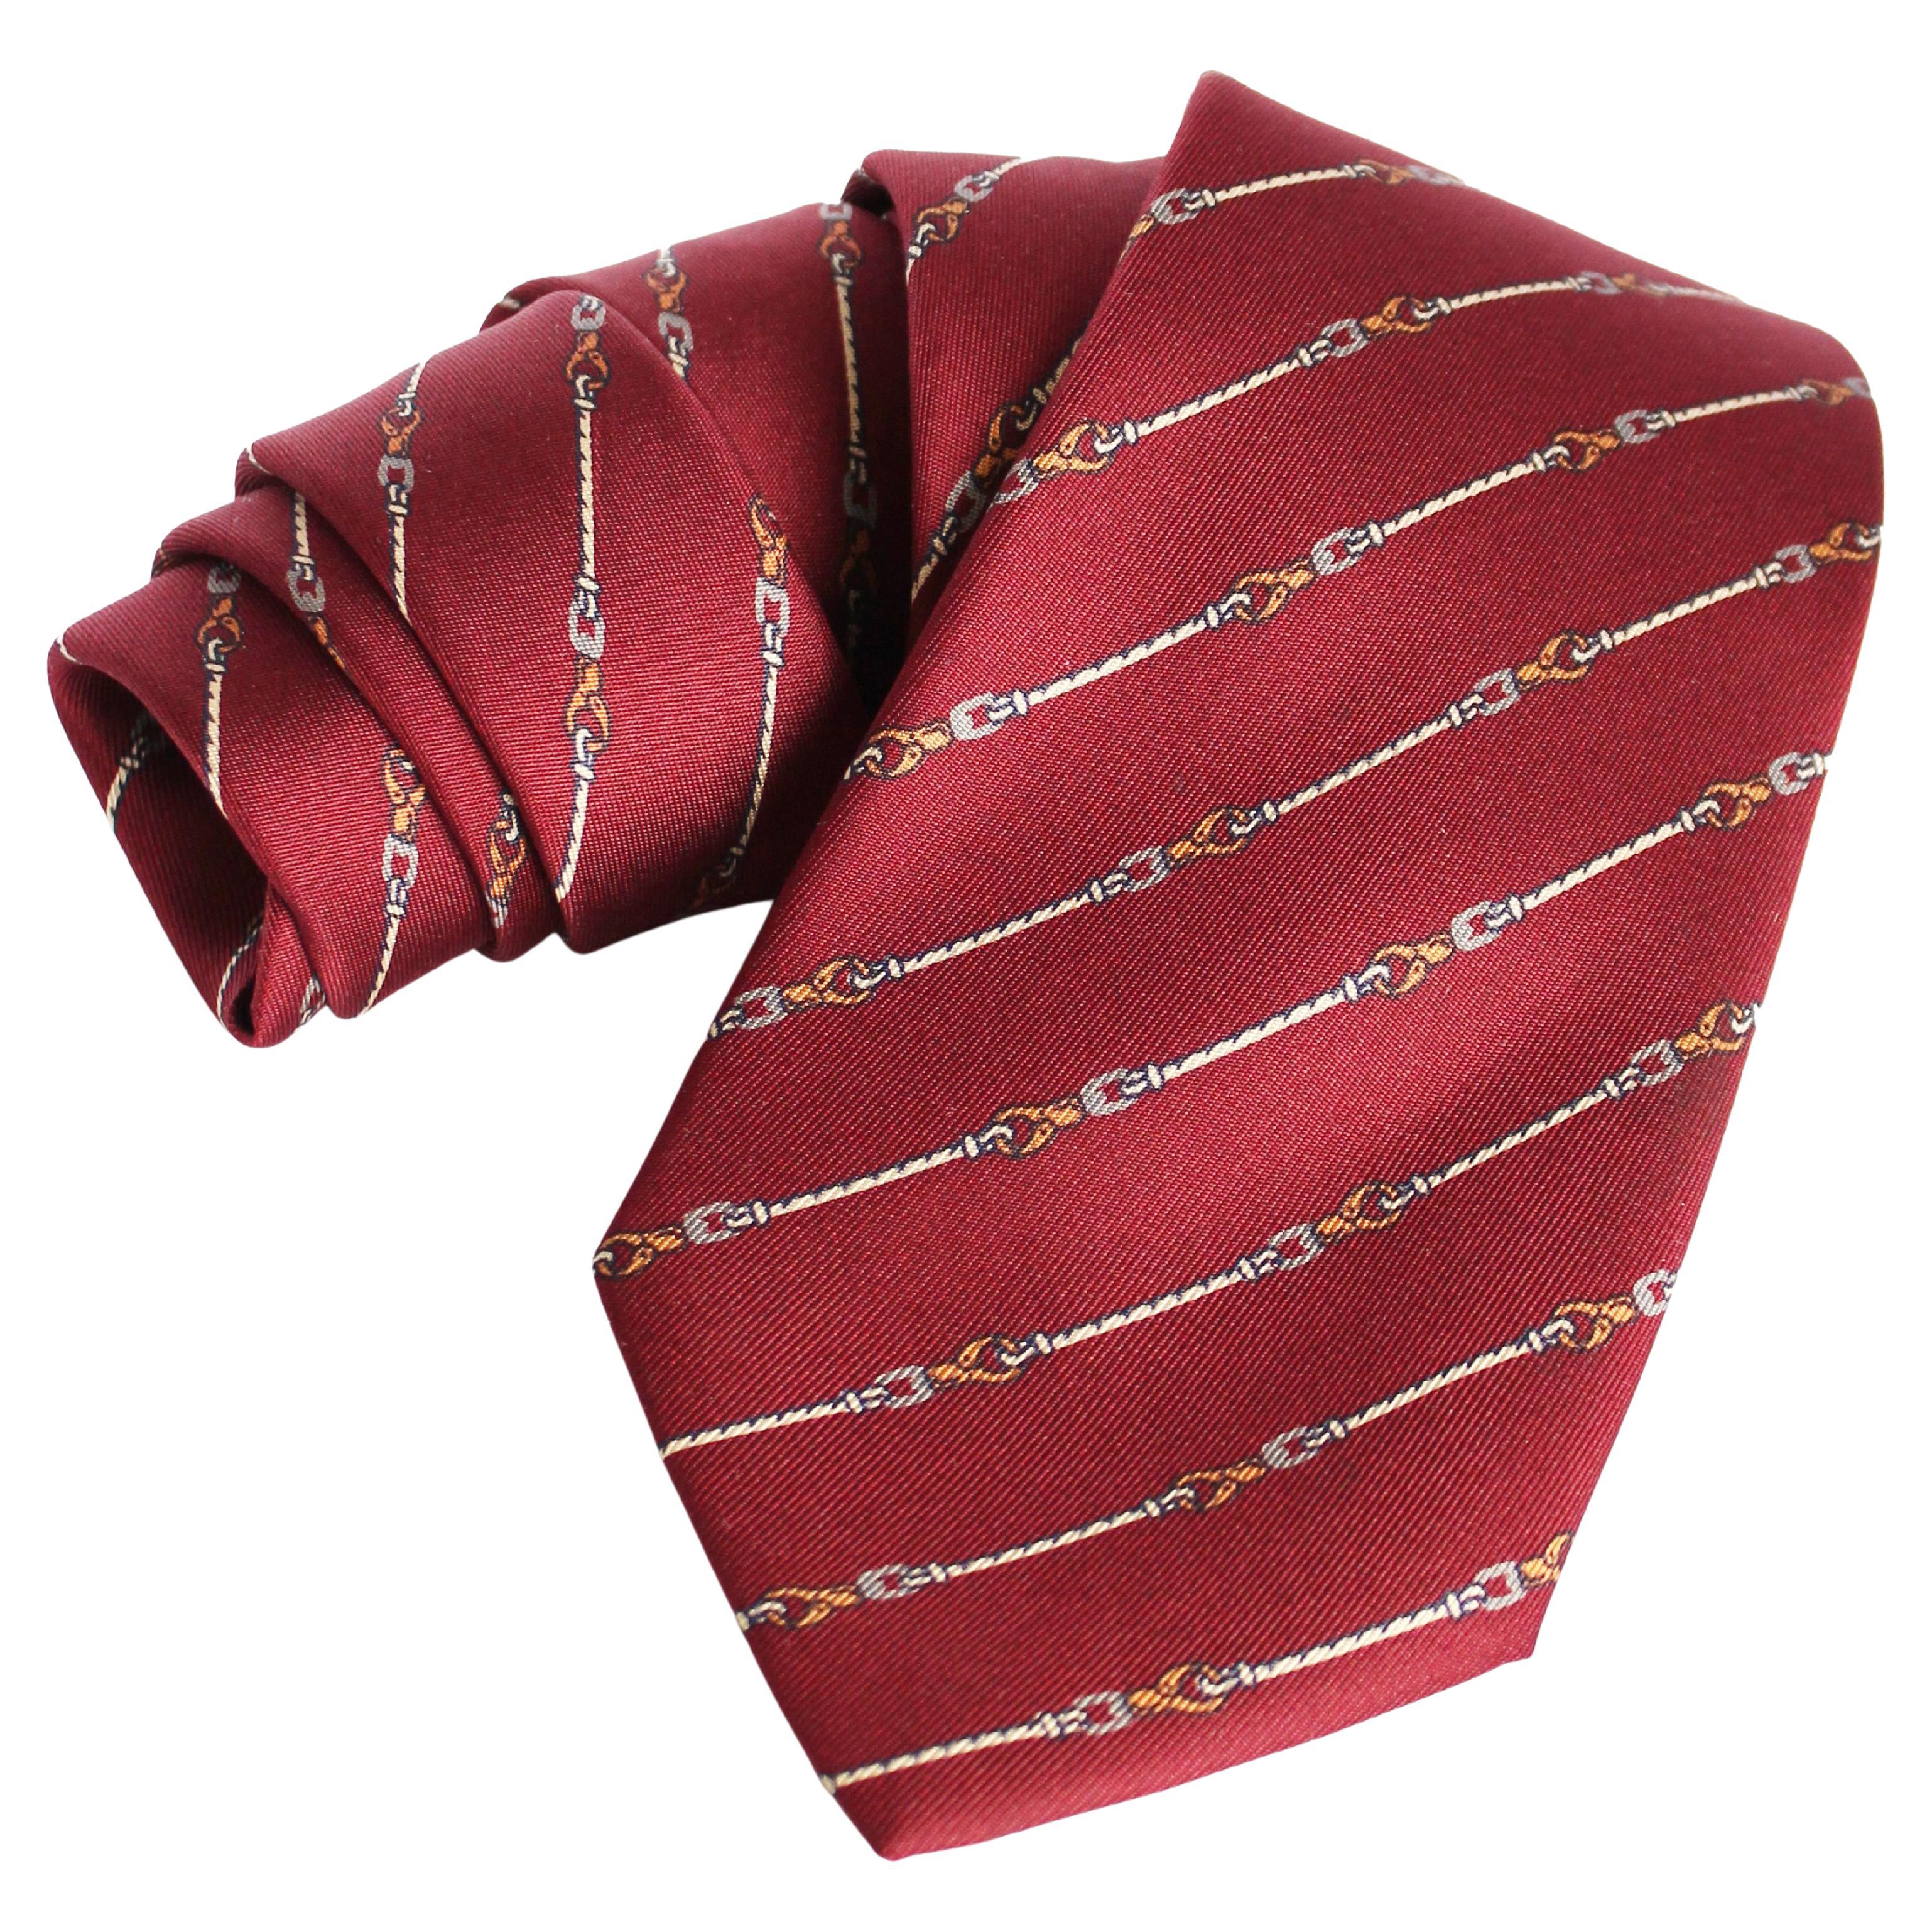 Vintage Mens Suit Neck Tie. 100% Pure Silk Neck Tie From 